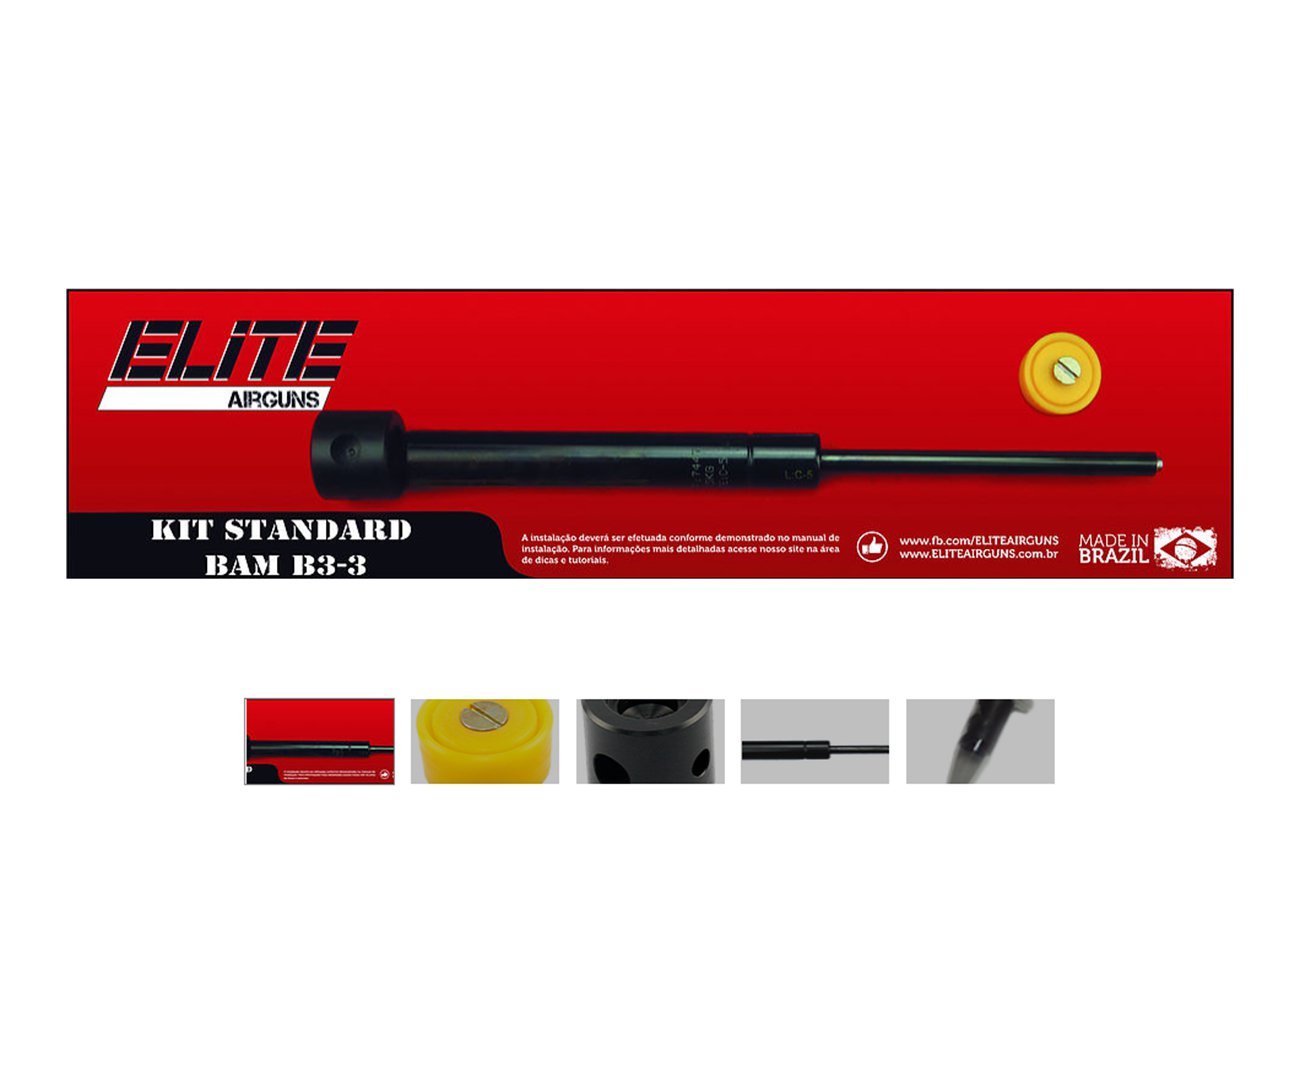 Kit Customização Standard Carabina Bam B3-3 -50kg - Elite Airguns